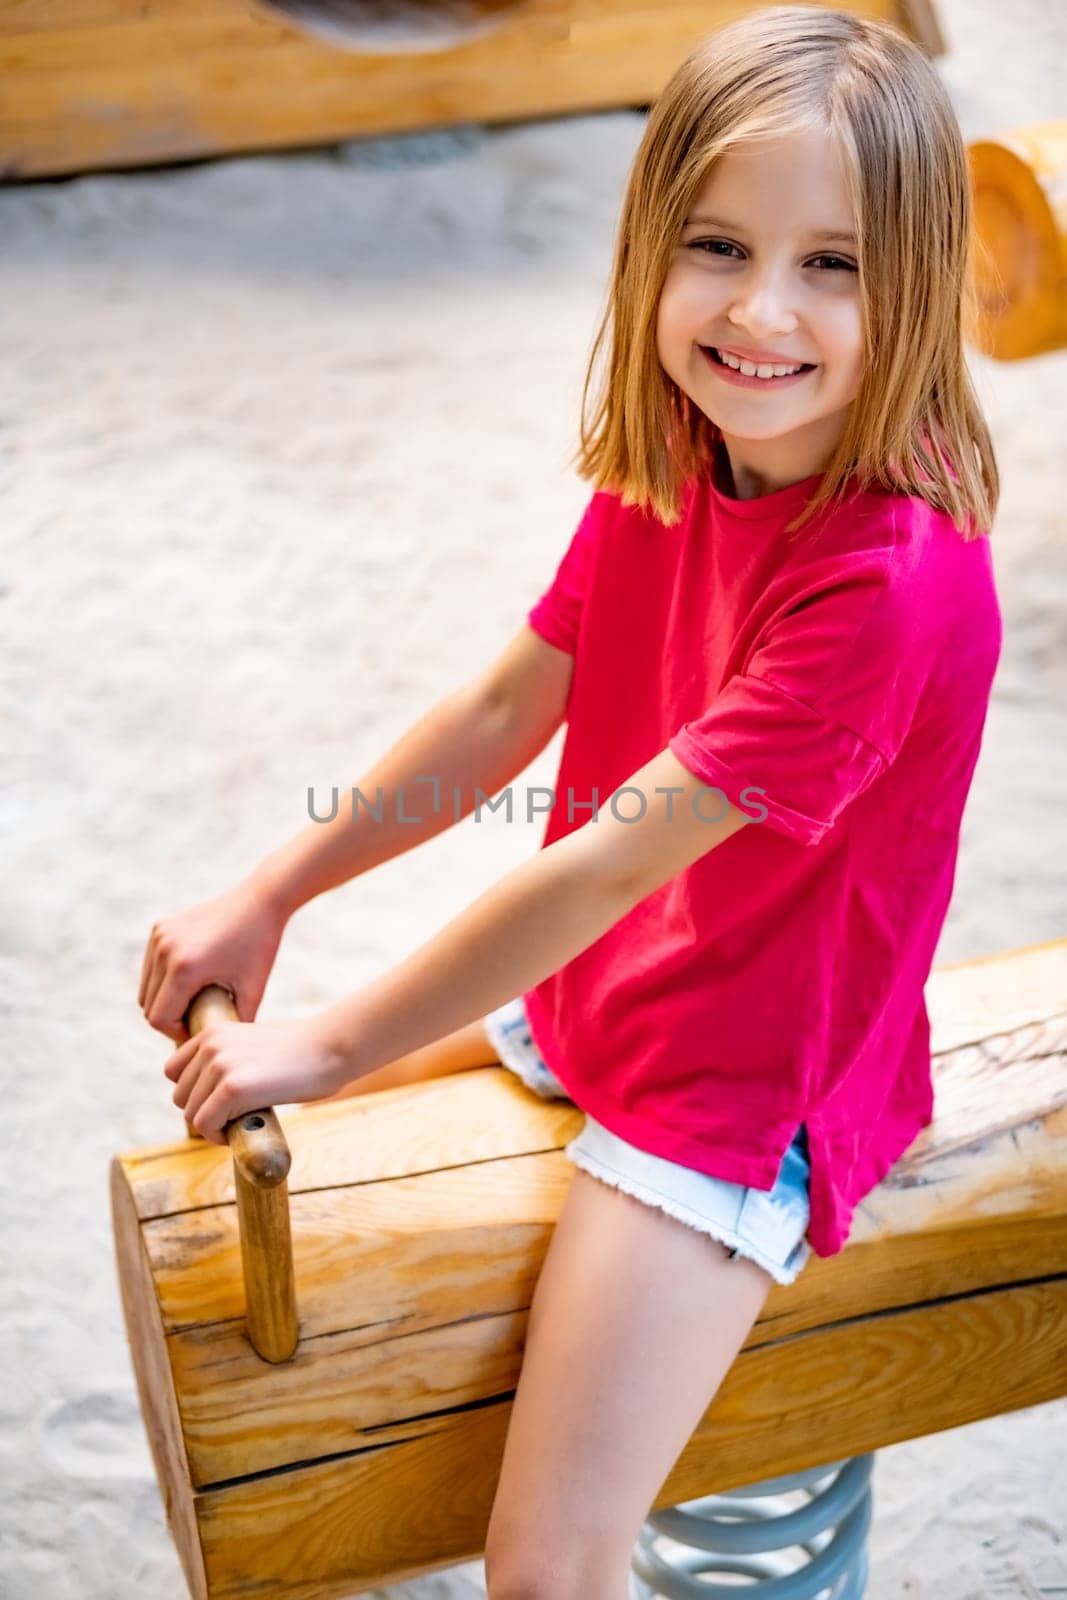 Little girl riding swing on playground by GekaSkr